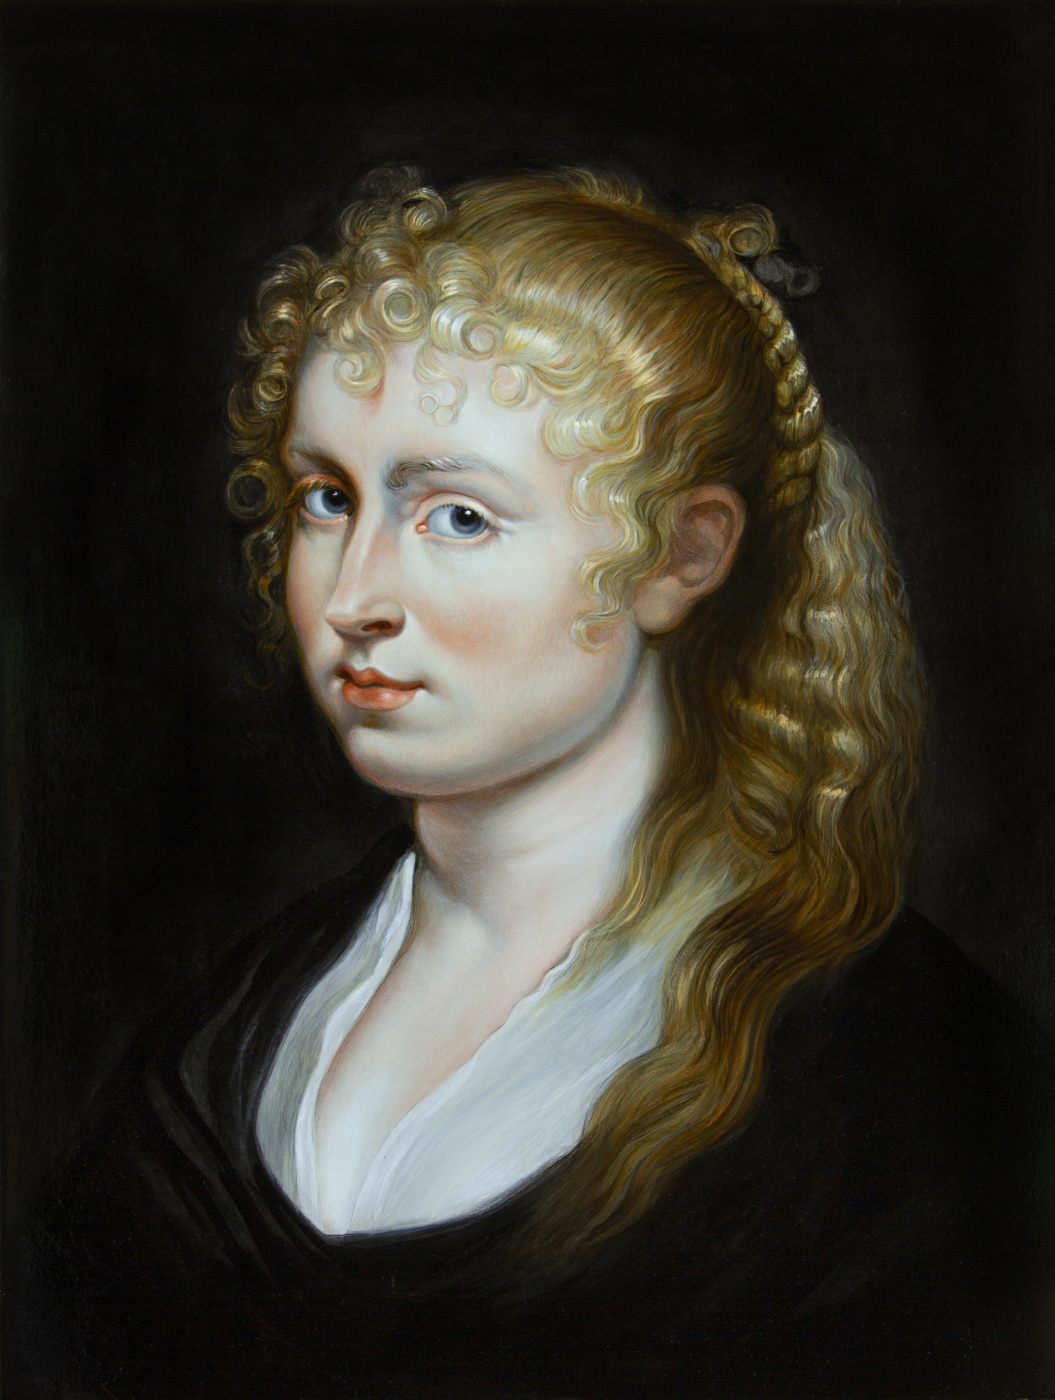 Sushienok64 @ mail.ru Mikhailovich Sushenok Igor. Portrait of a Girl. Copy from a work by P. Rubens